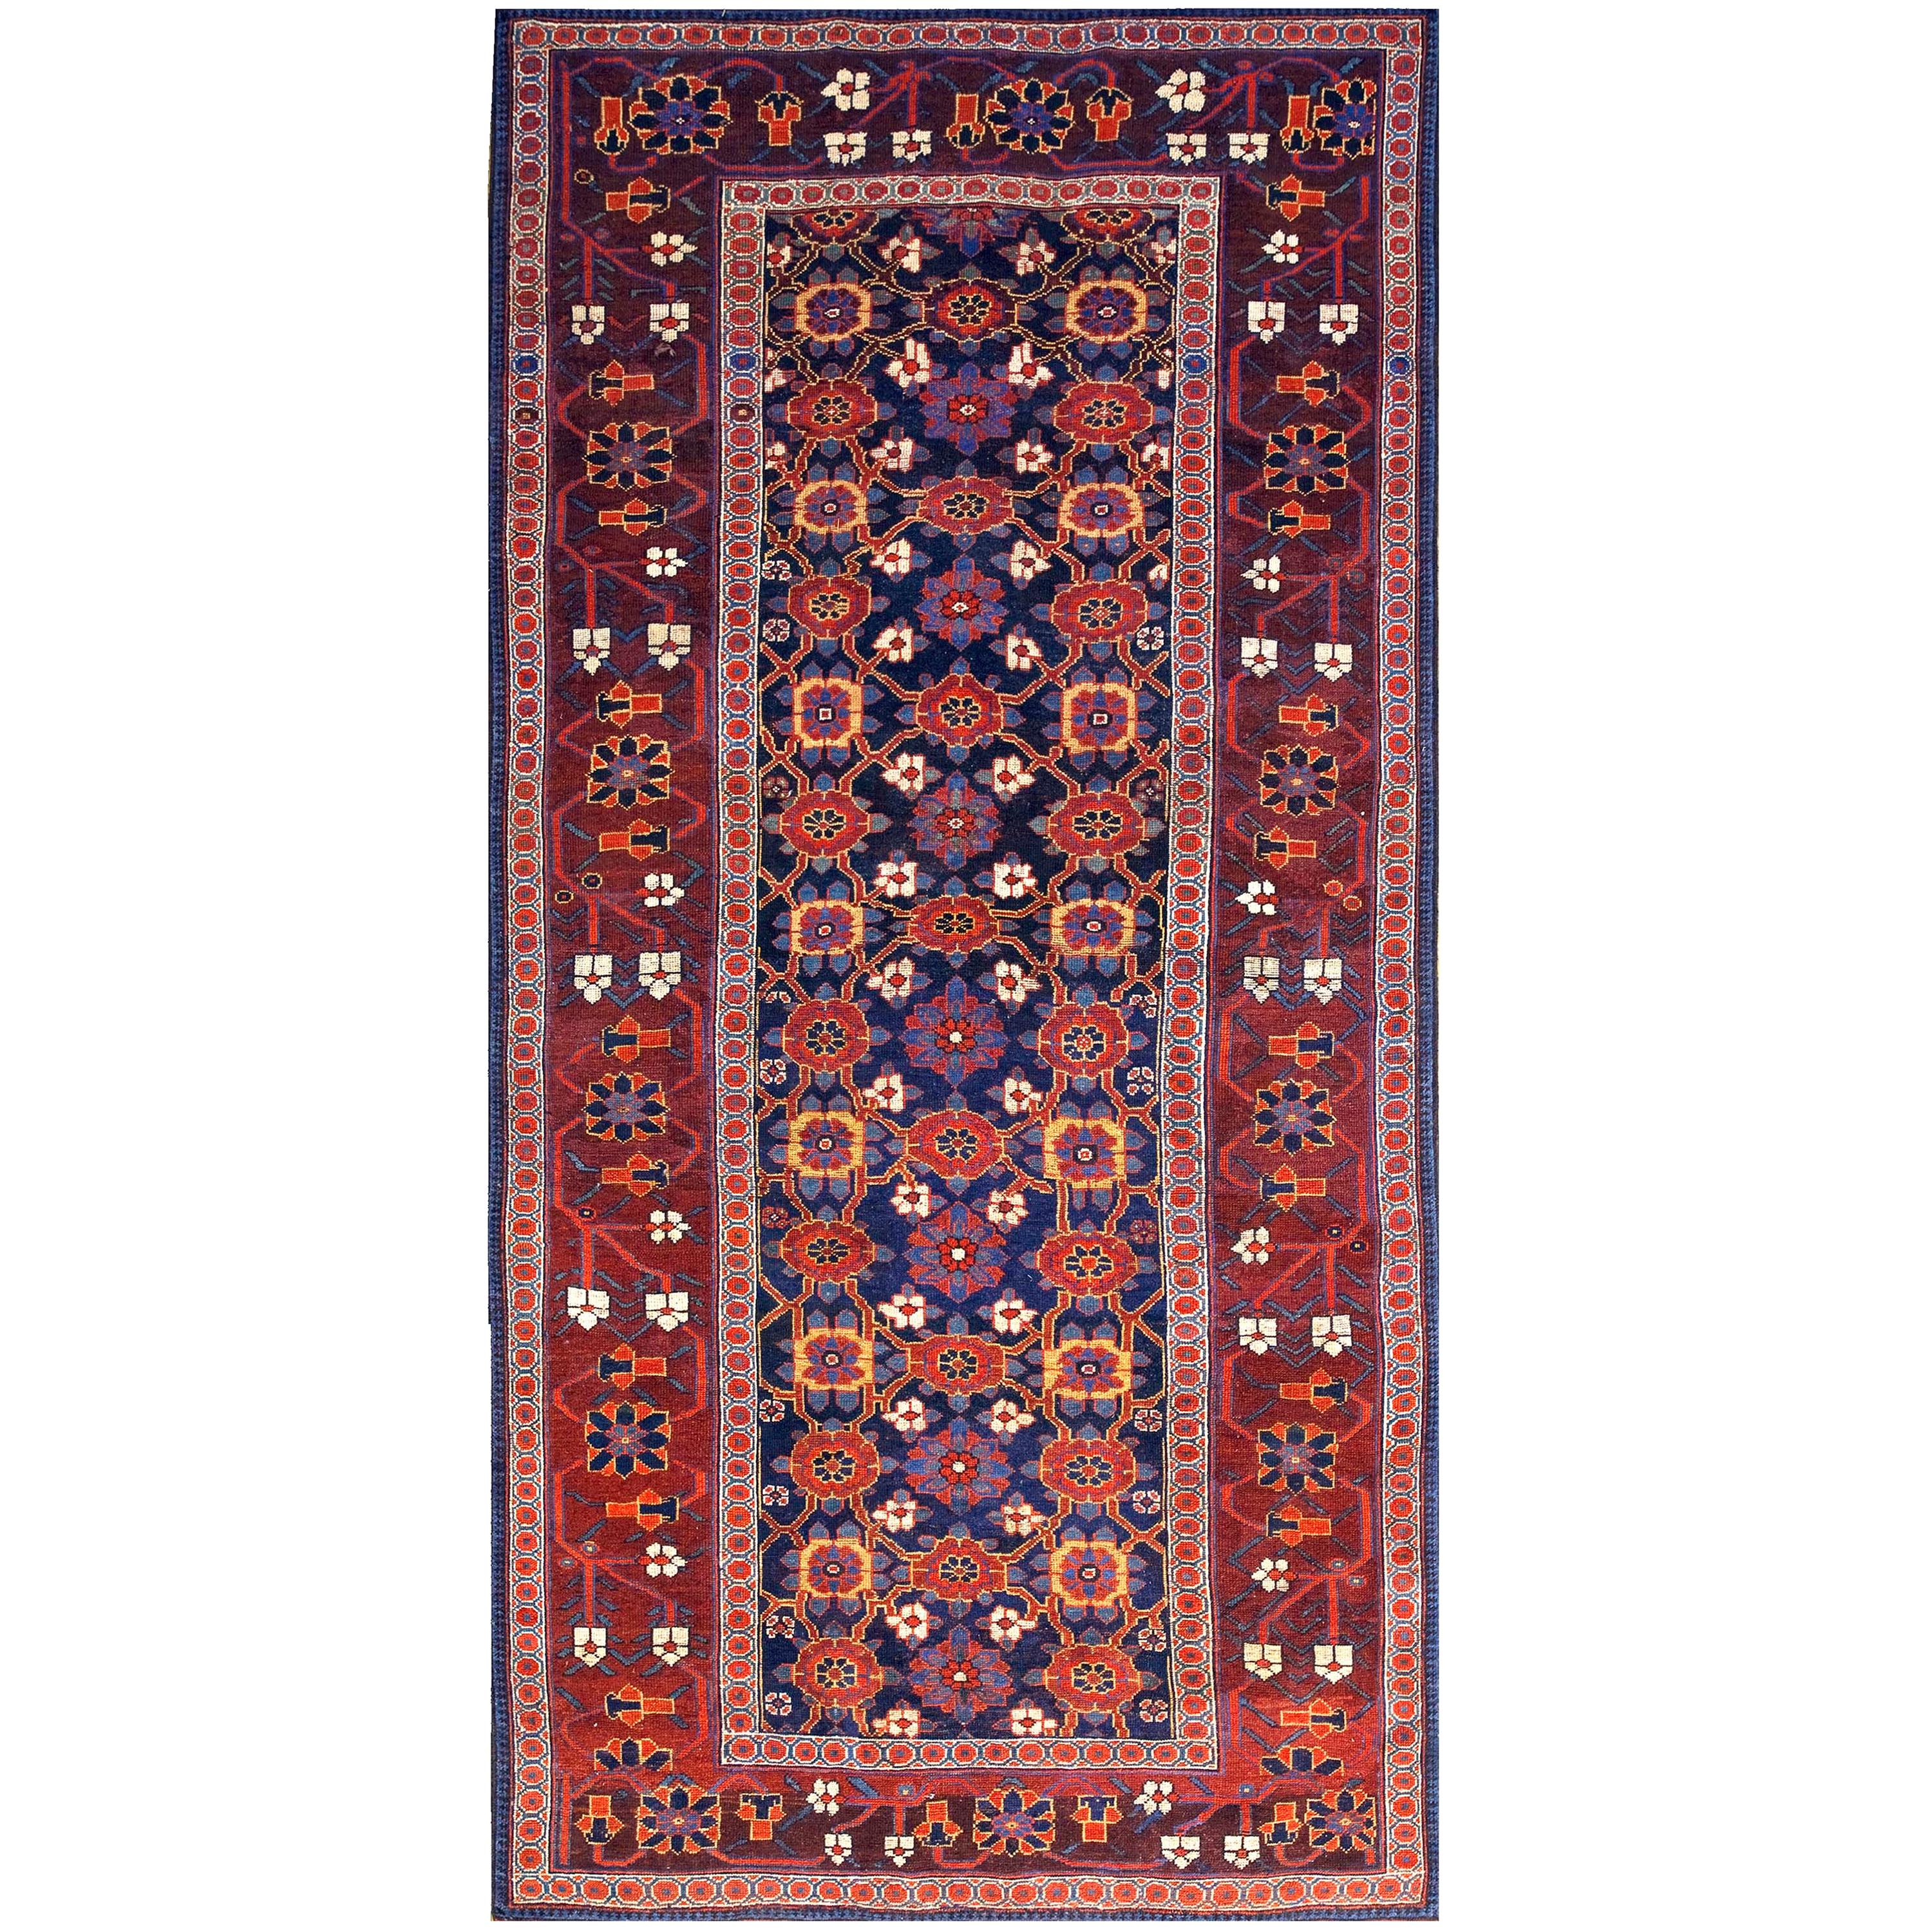 Late 19th Century Persian Kurdish Carpet ( 5'4" x 10'9" - 163 x 328 ) For Sale